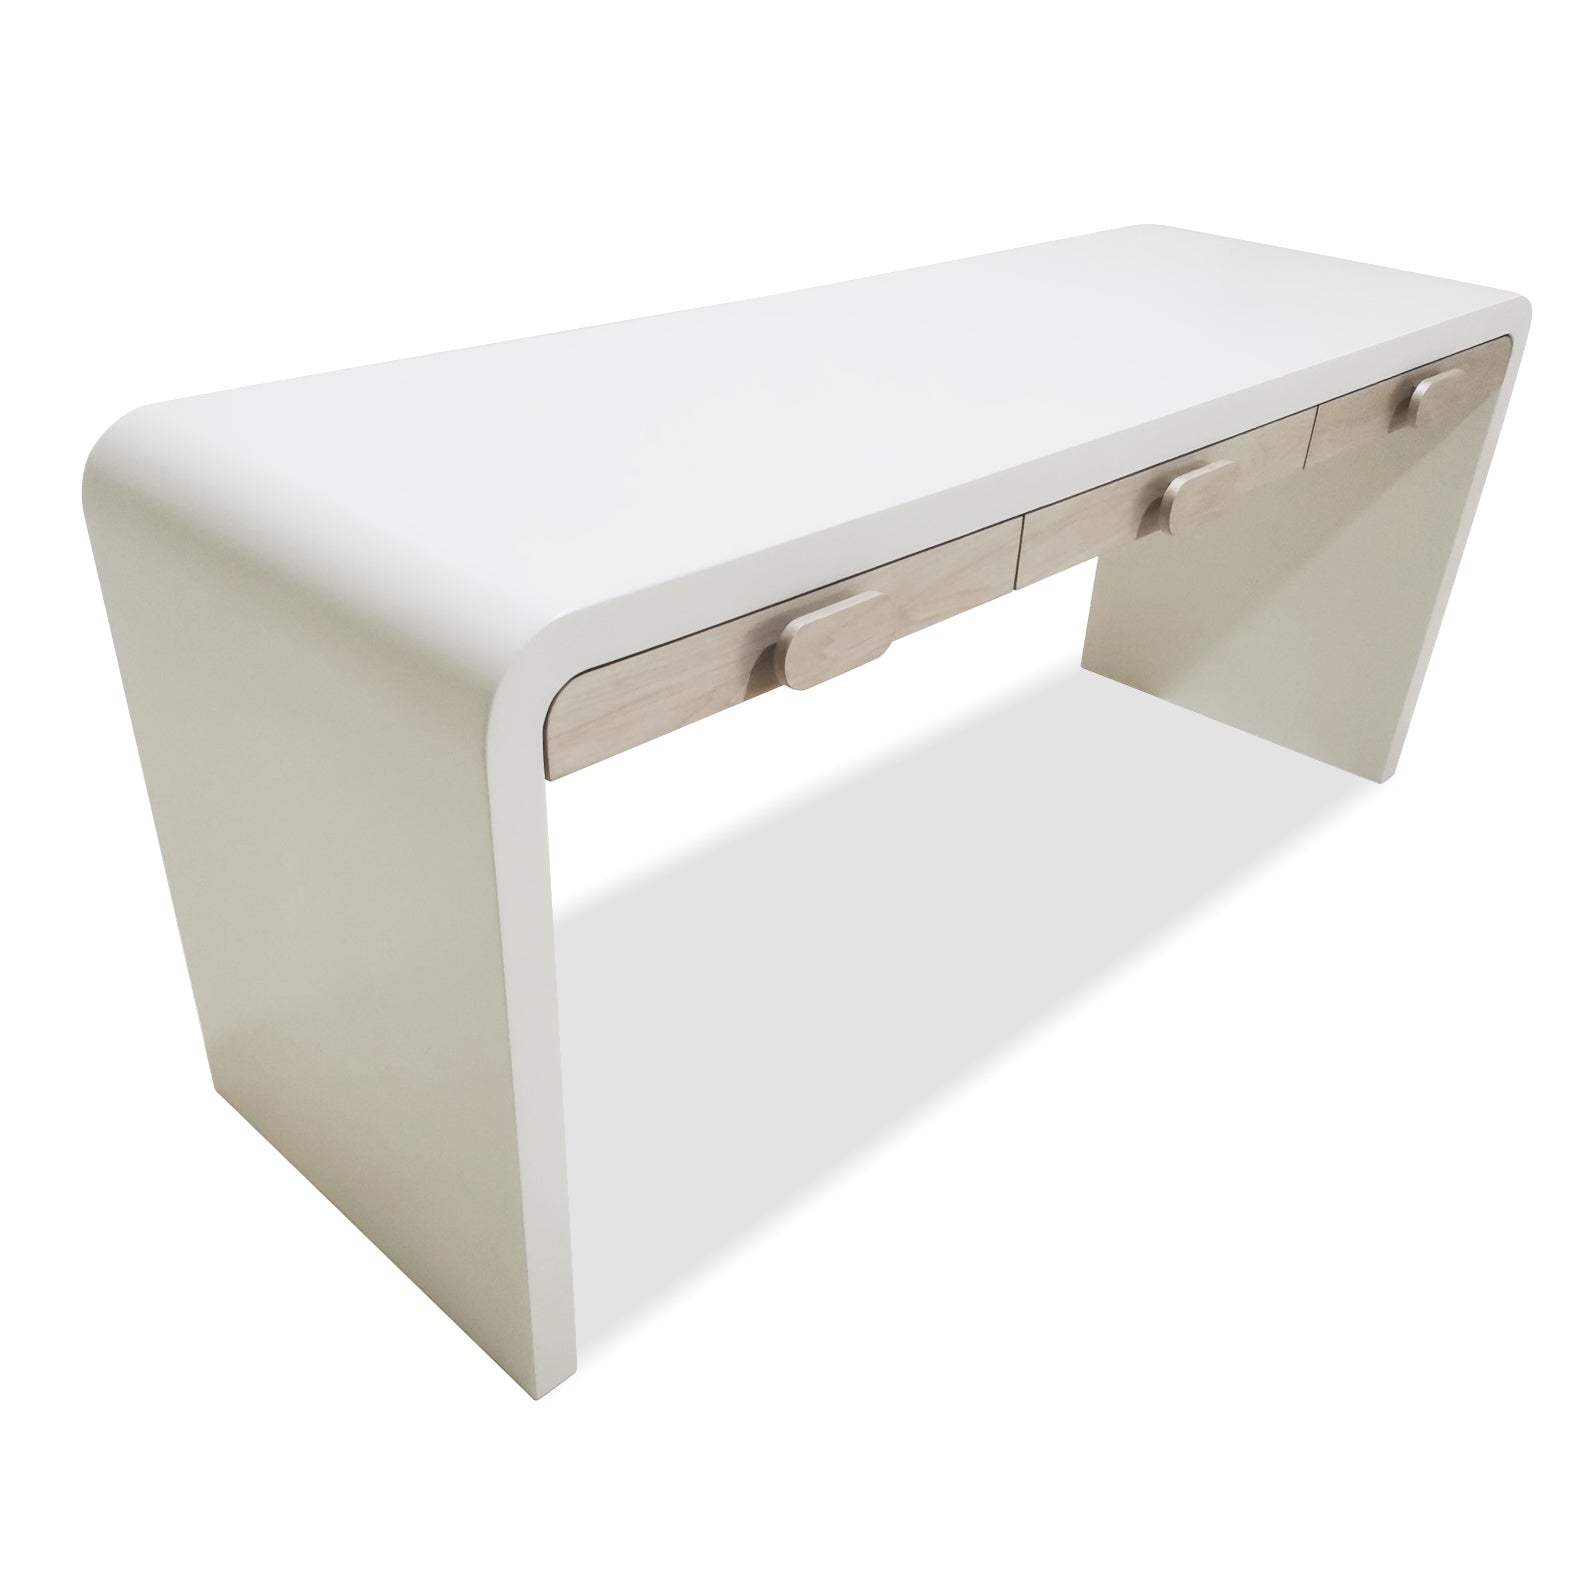 Modern Desks - Lucite, White Lacquer, Wood & More - ModShop